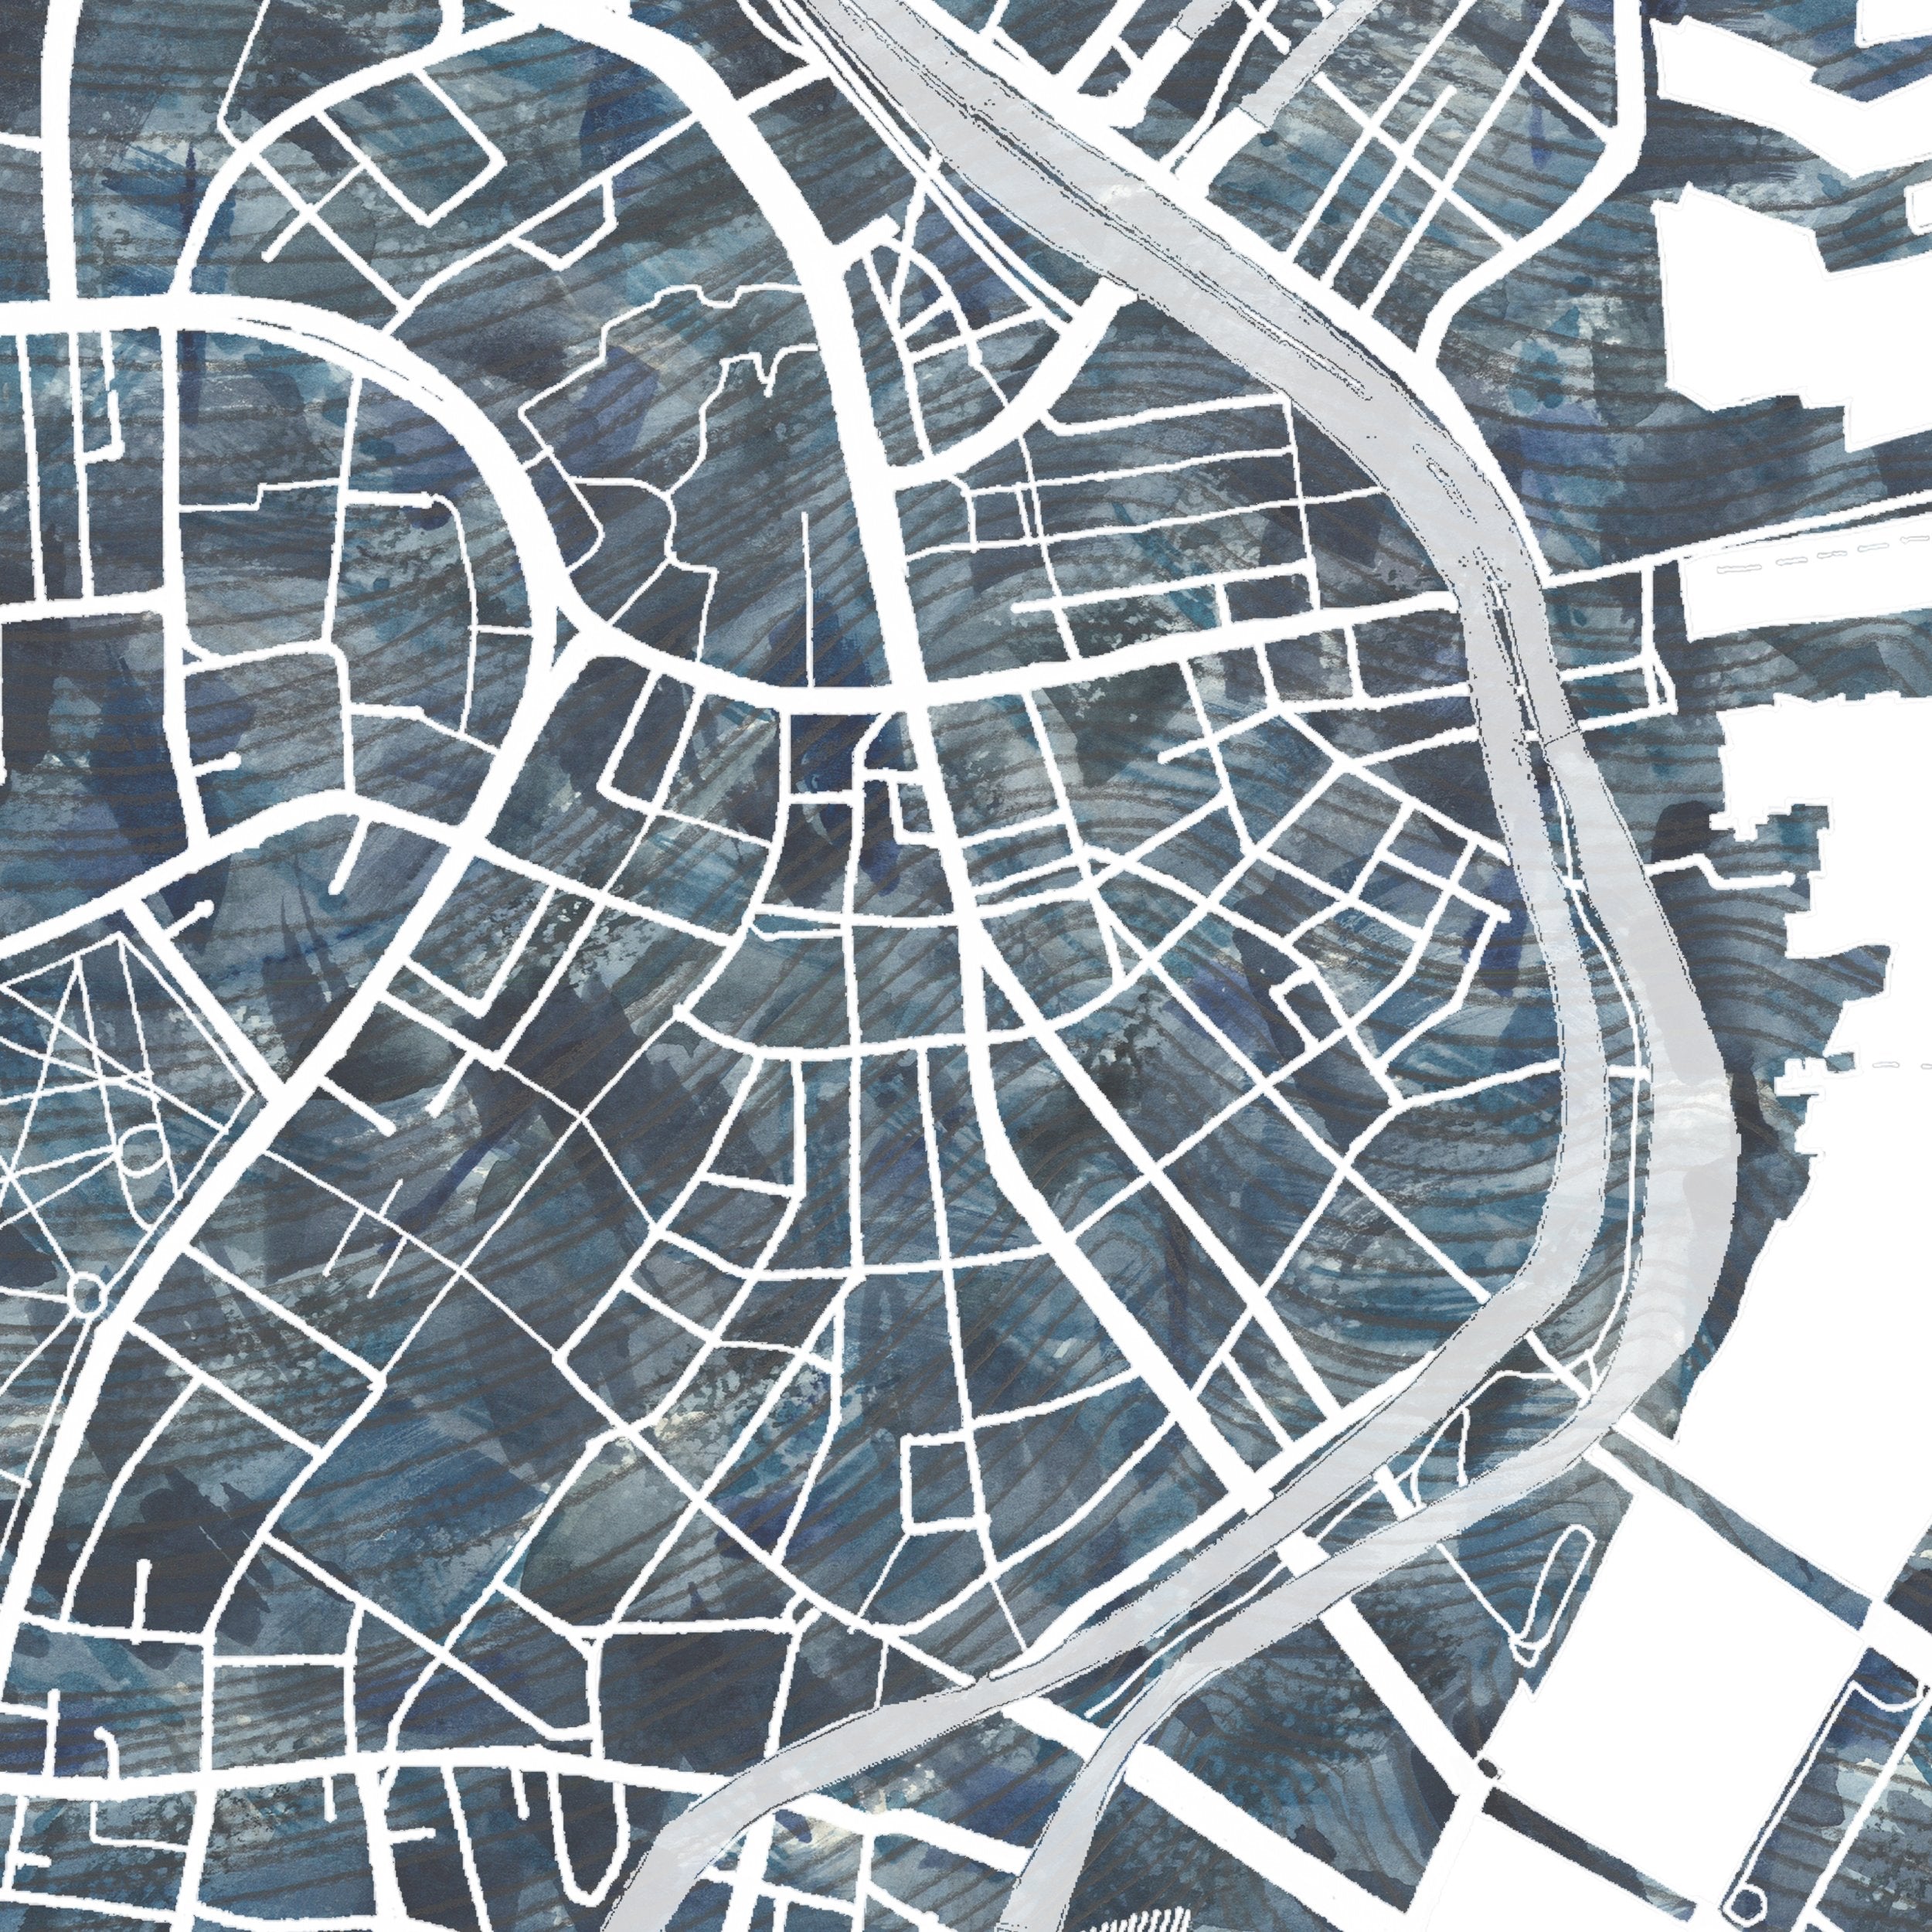 BOSTON Urban Fabrics City Map: PRINT